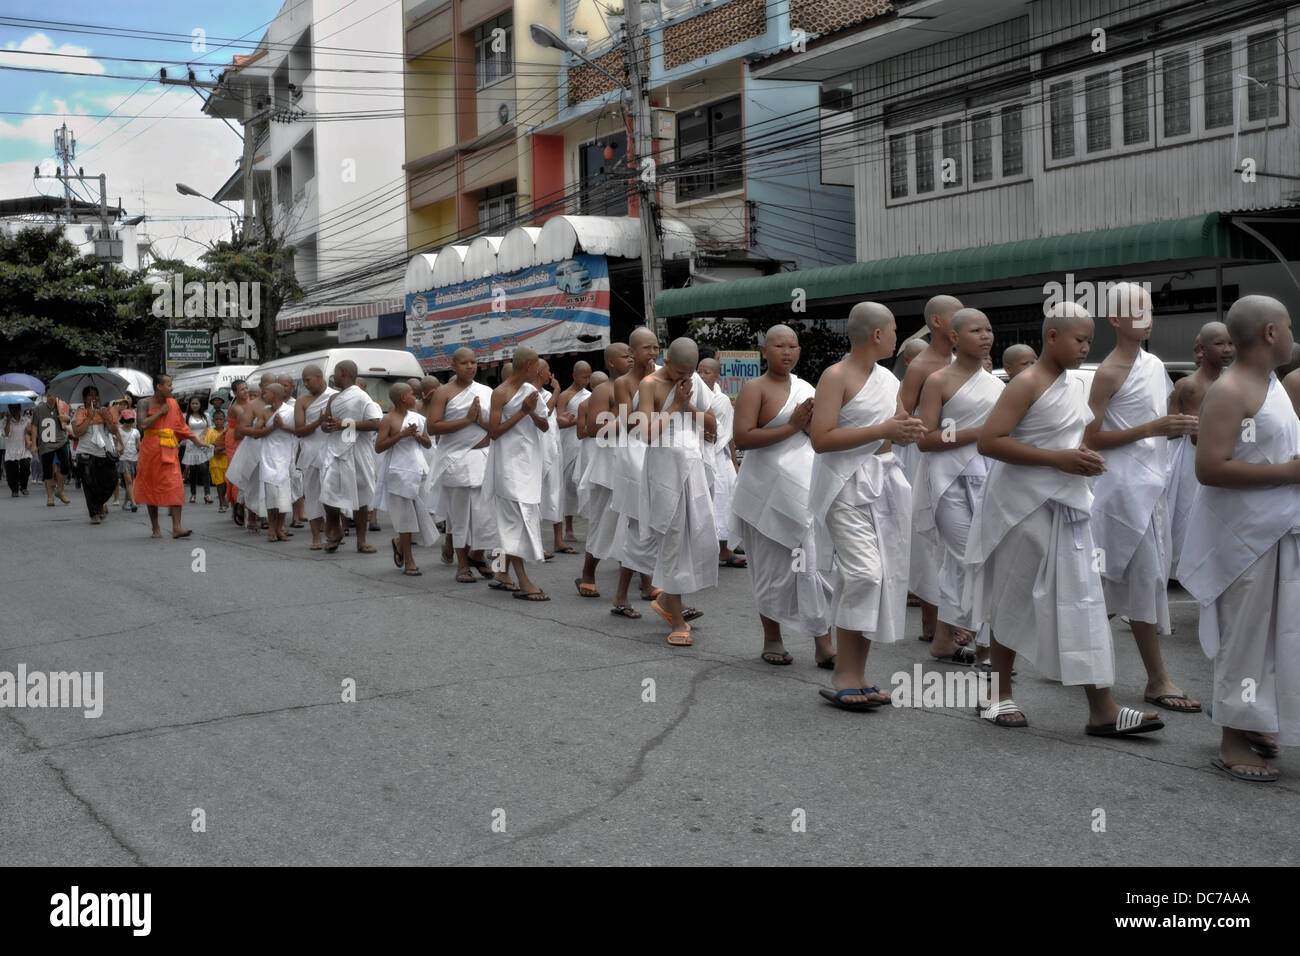 Thailand boy Monks. Buddhist novice monks parading through the street en-route to their ordination ceremony. Thailand S. E. Asia. Stock Photo